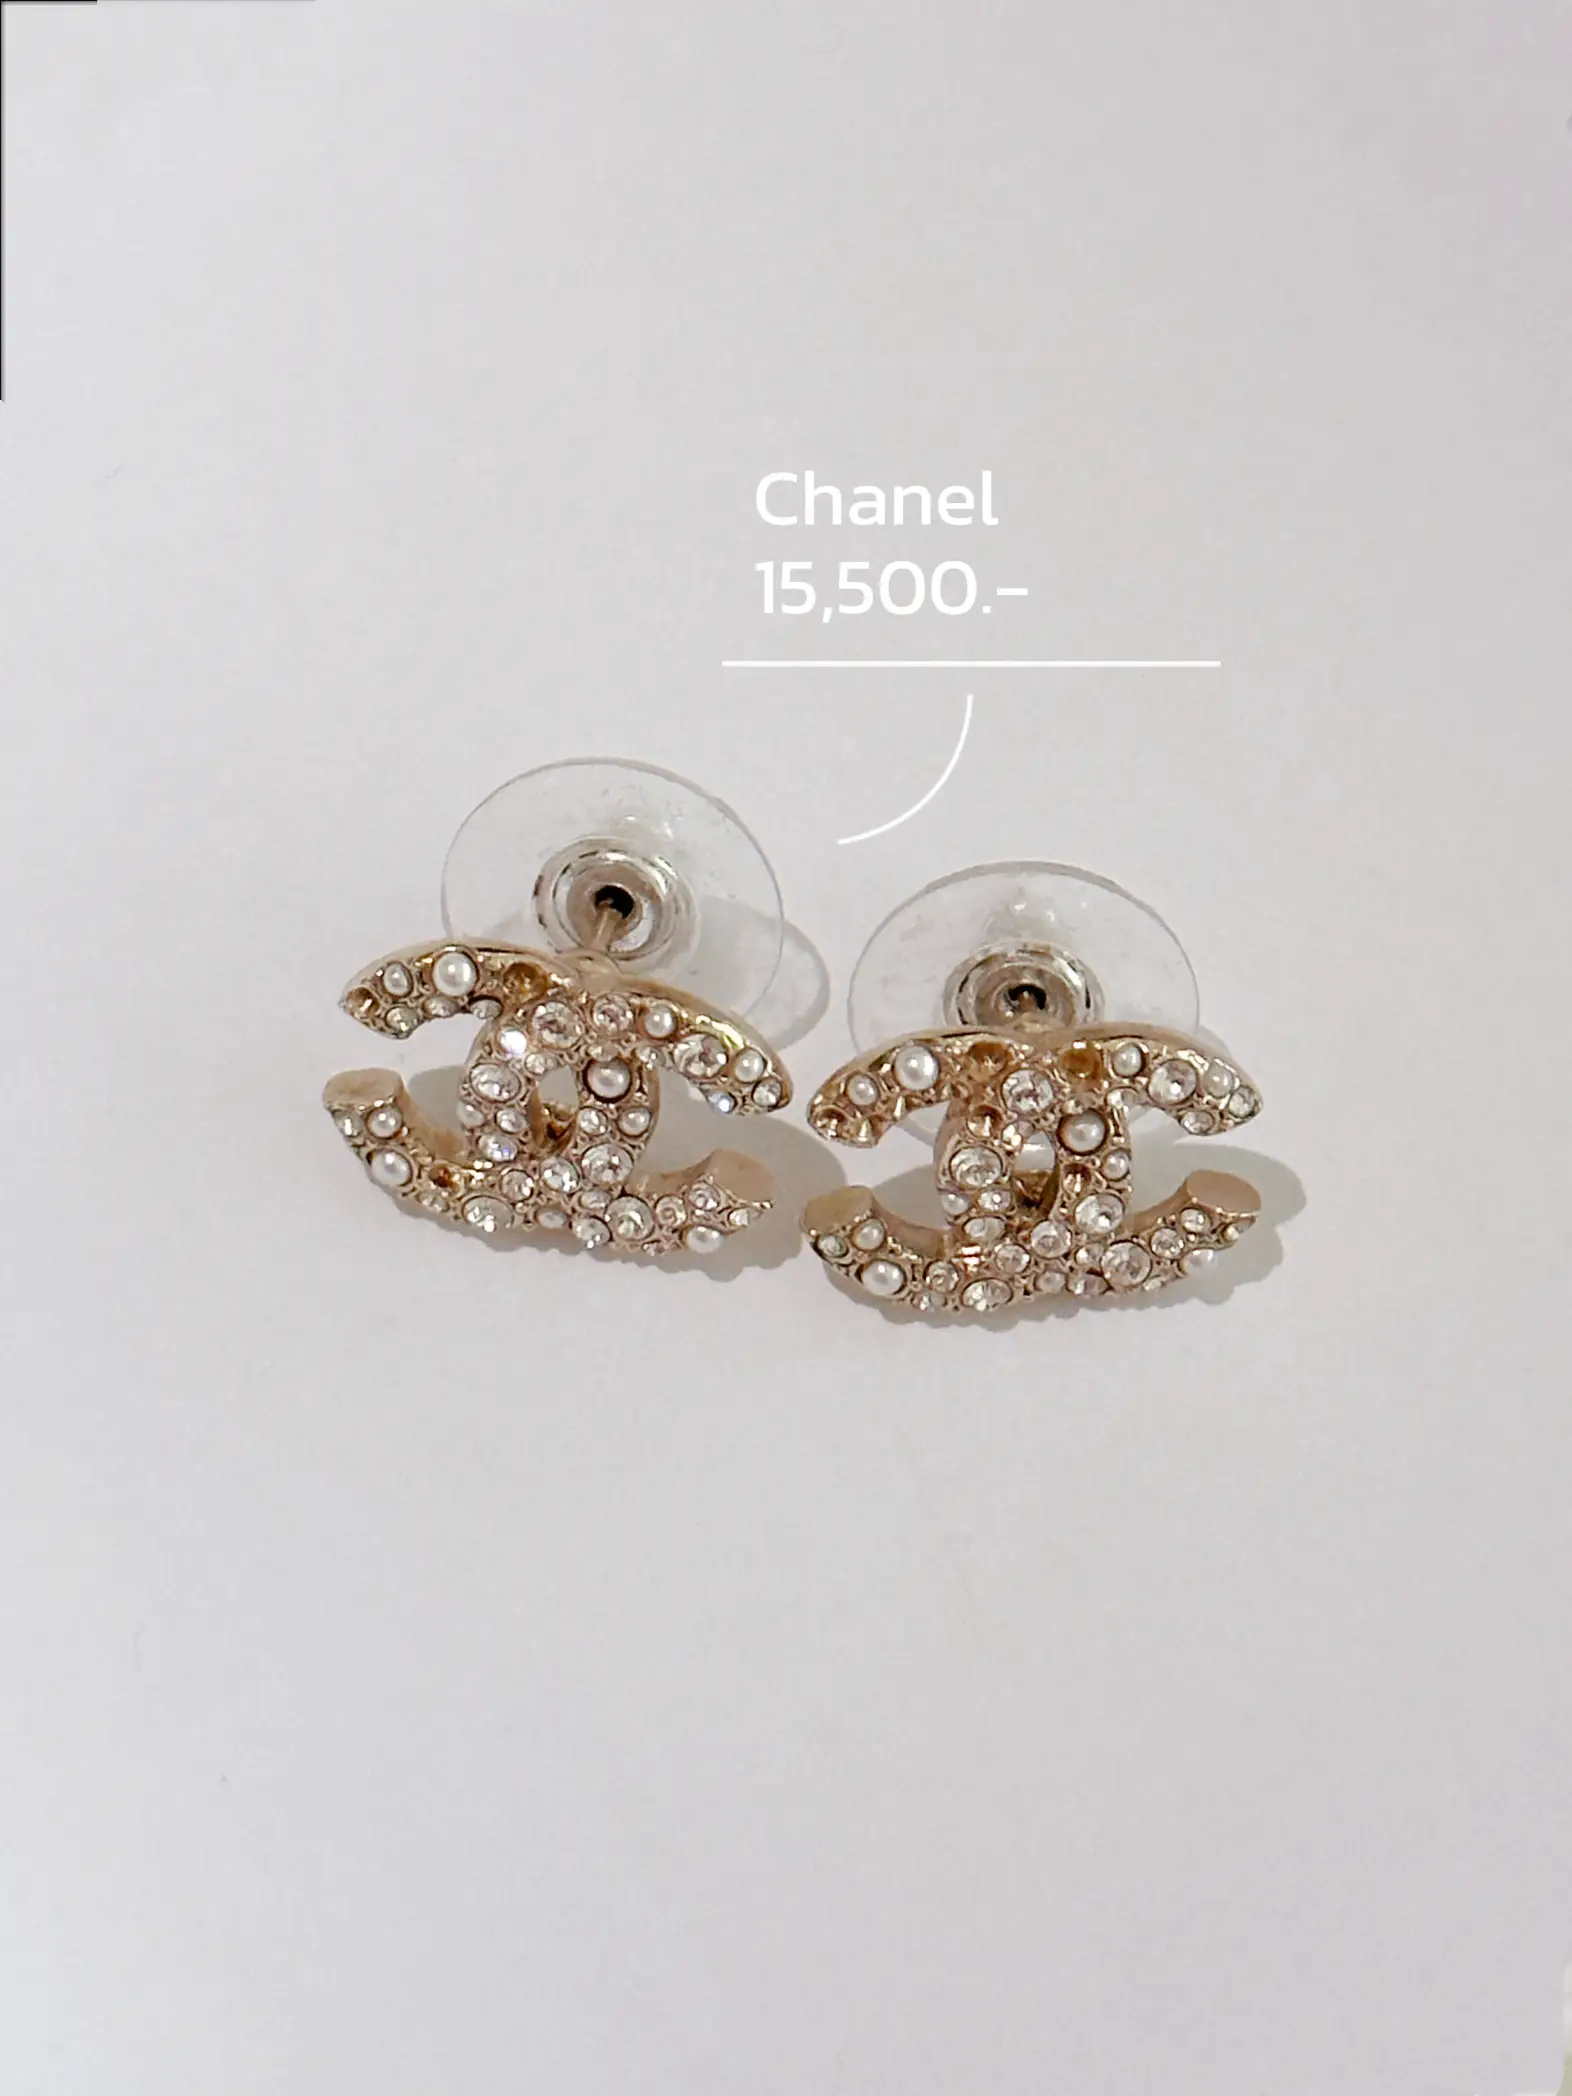 Diamond Earrings vs Super Rat Luxury Brand Pearl Earrings🤍💎💍, Gallery  posted by specialnice